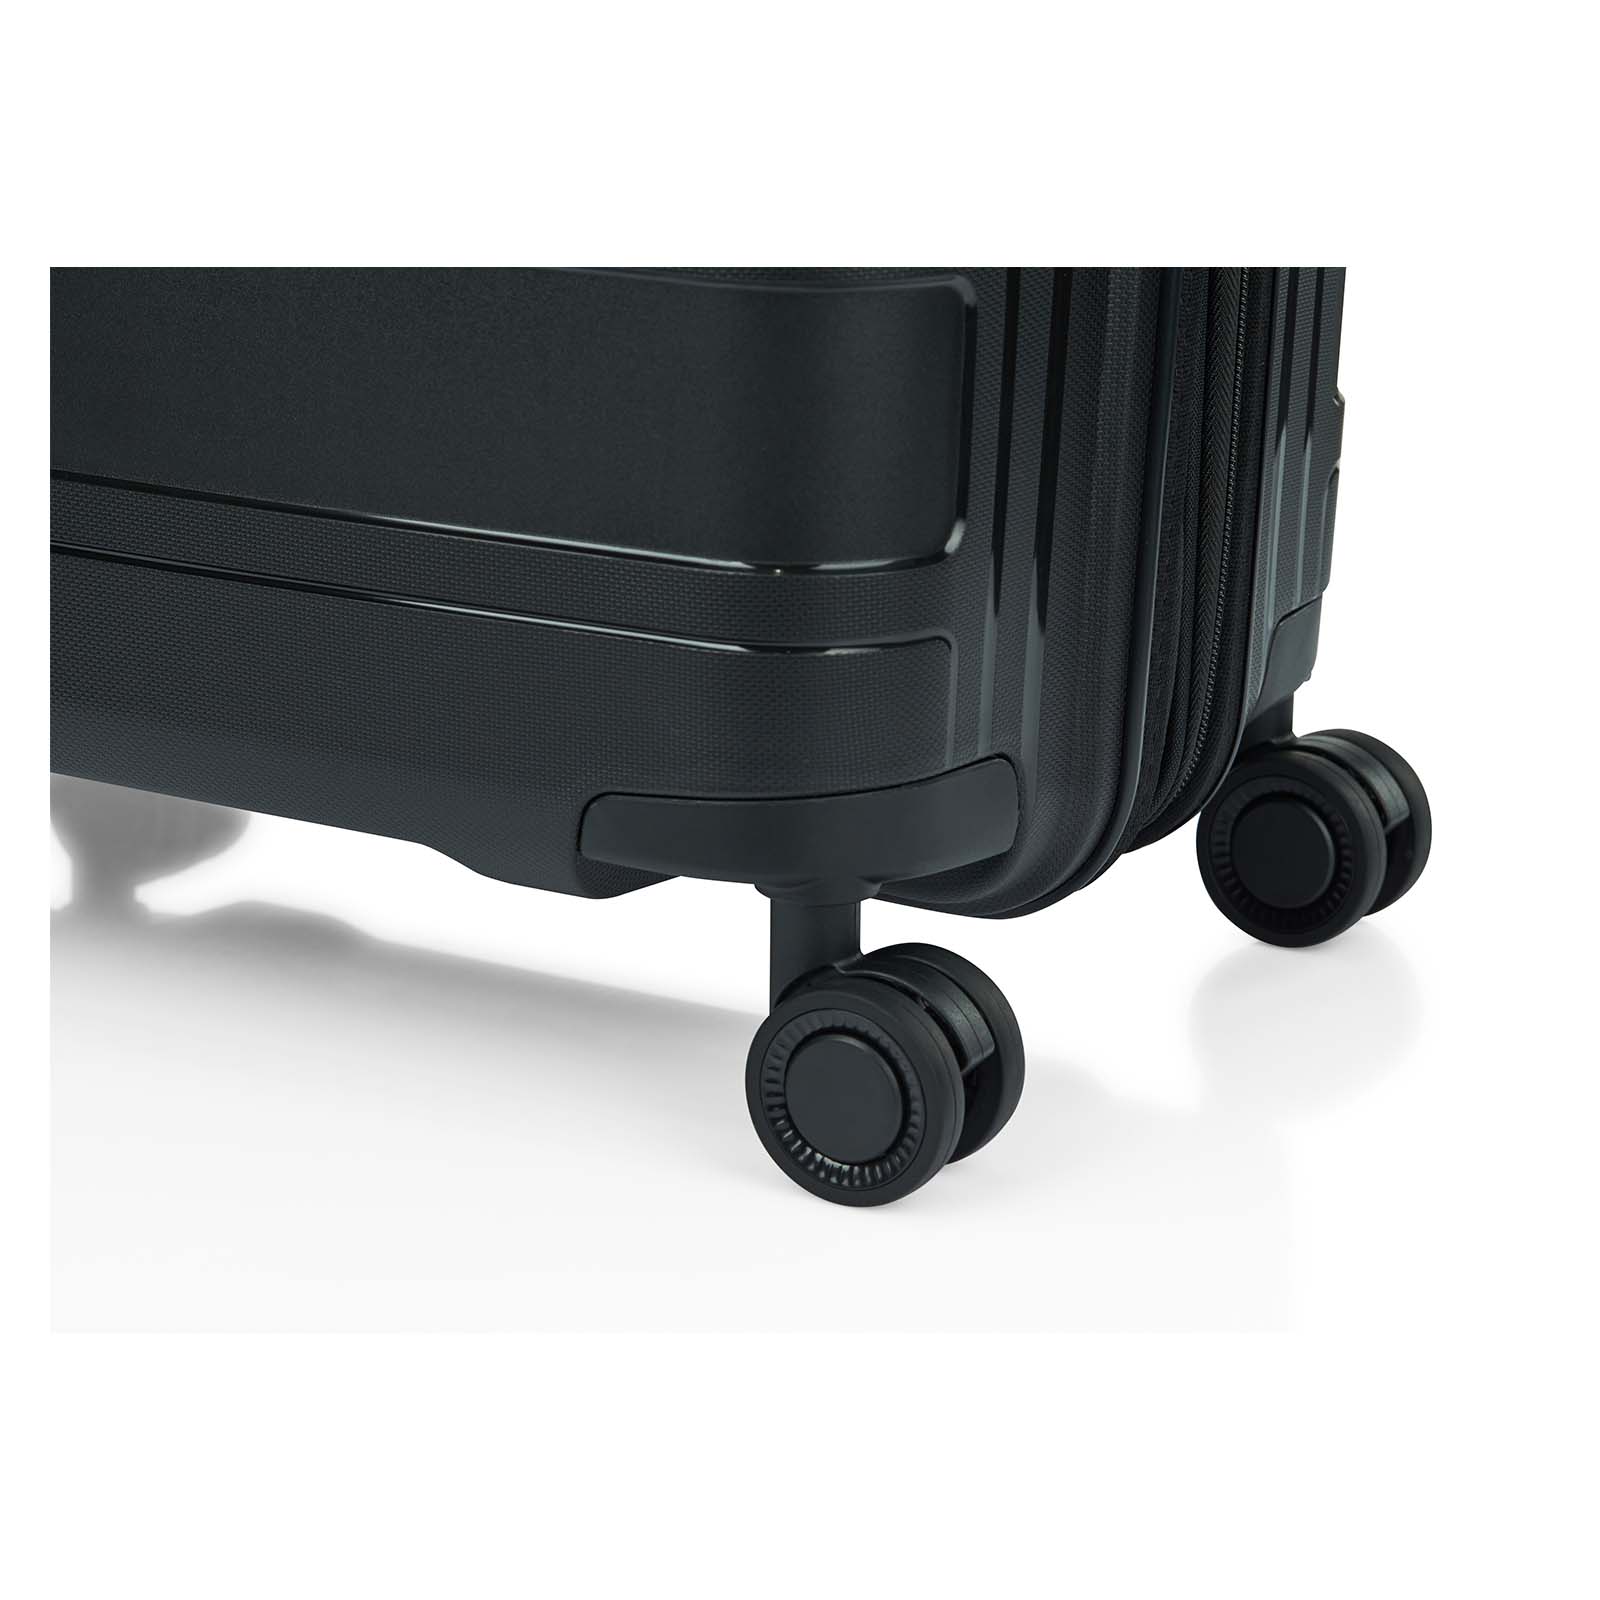 American-Tourister-Light-Max-82cm-Suitcase-Black-Wheels